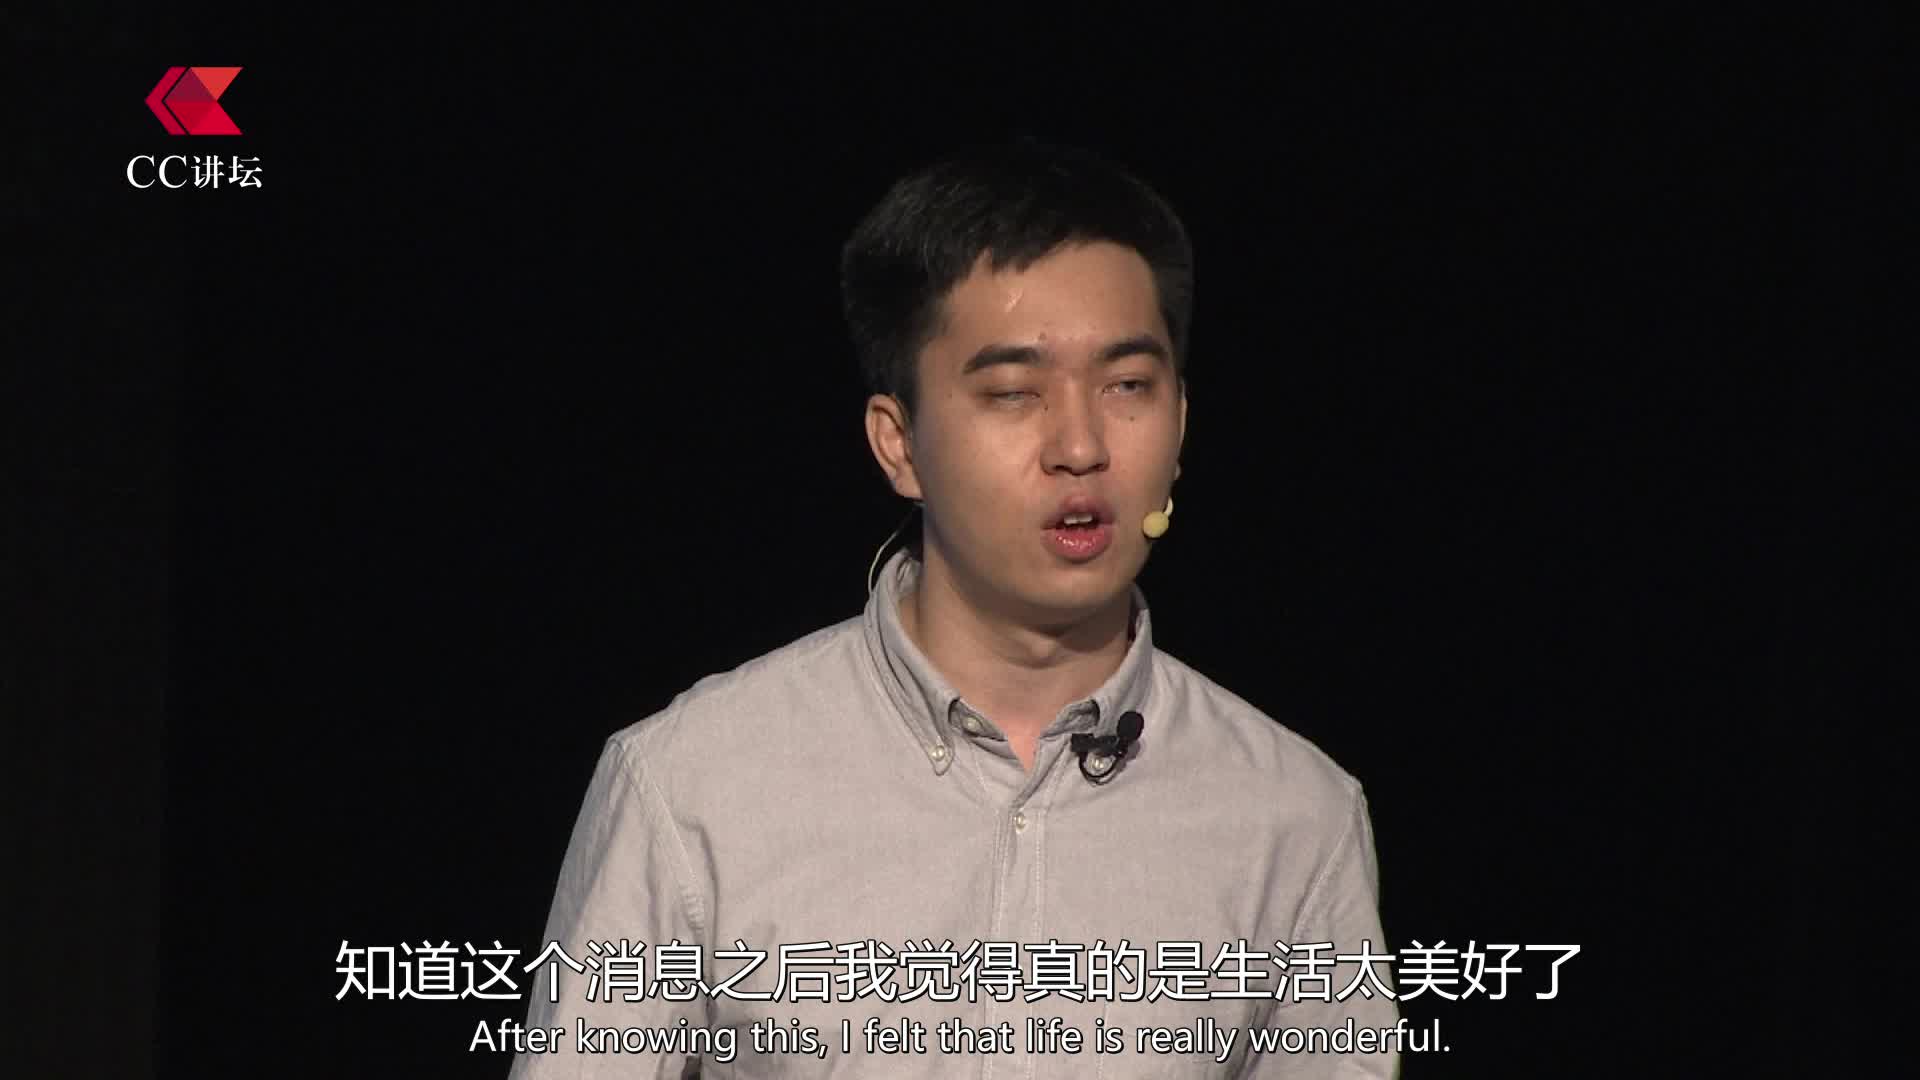 CC讲坛——蔡勇斌：我是用耳朵编程的程序员